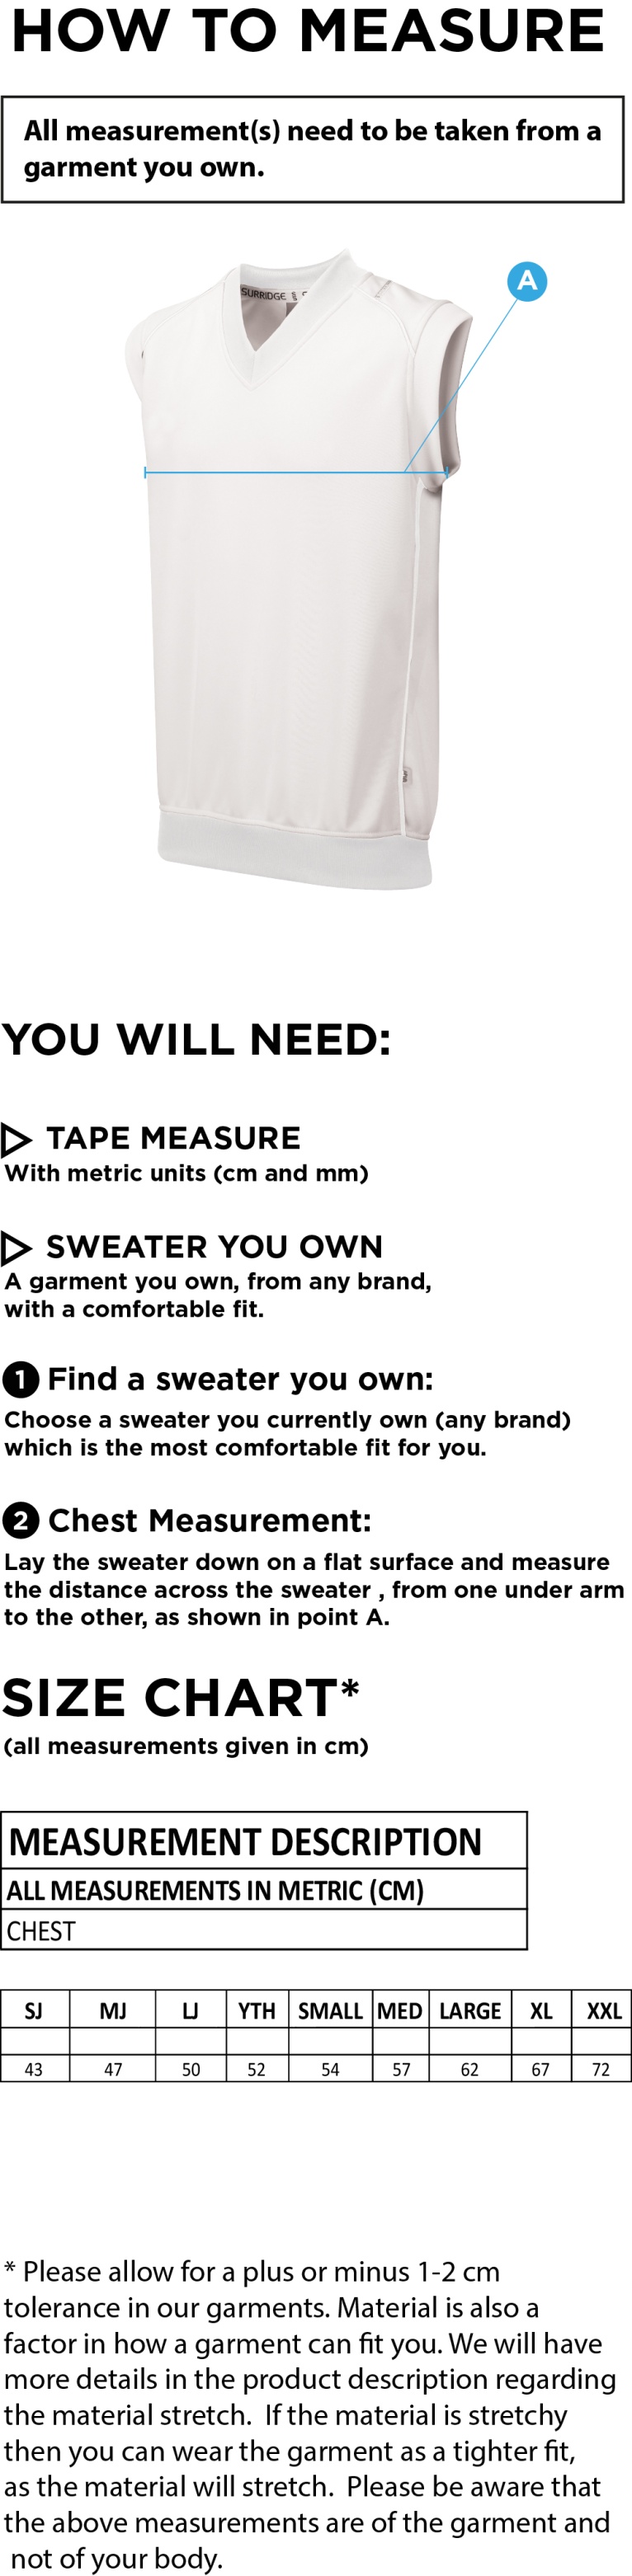 Eridge CC - Dual Sleeveless Sweater - Size Guide